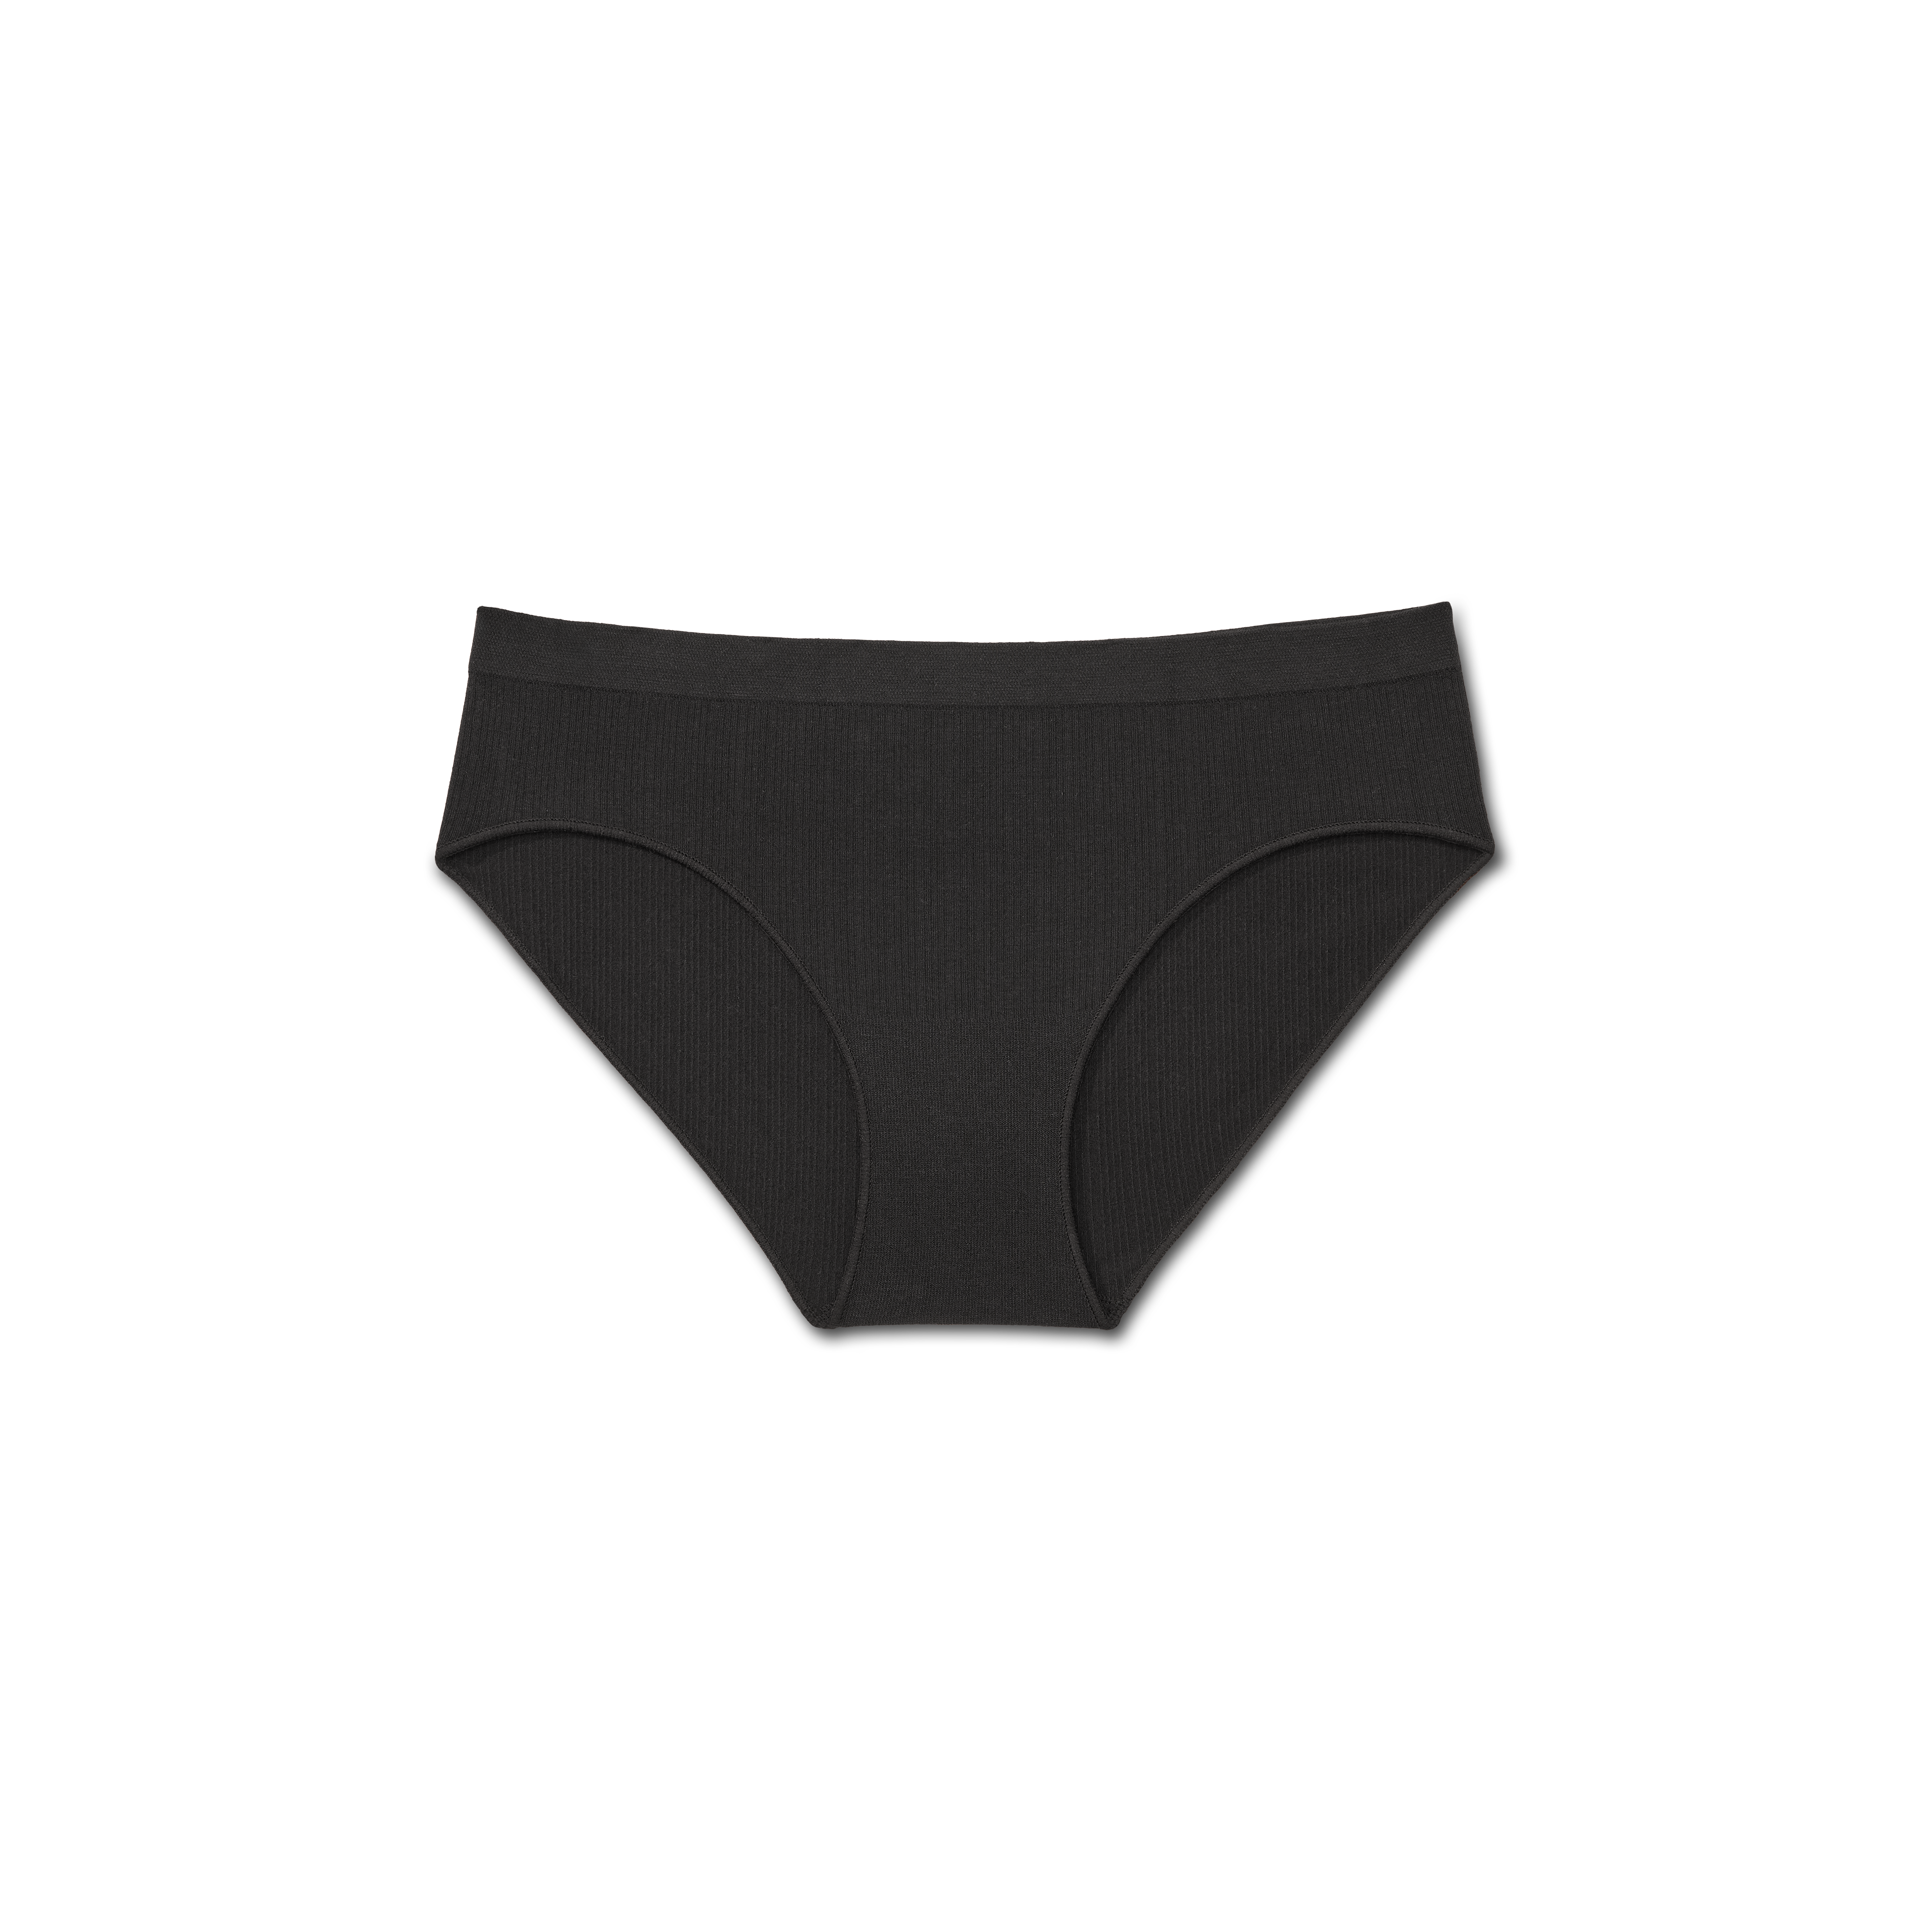 Viport Women's Breathable Seamless No Show Nylon Spandex Underwear